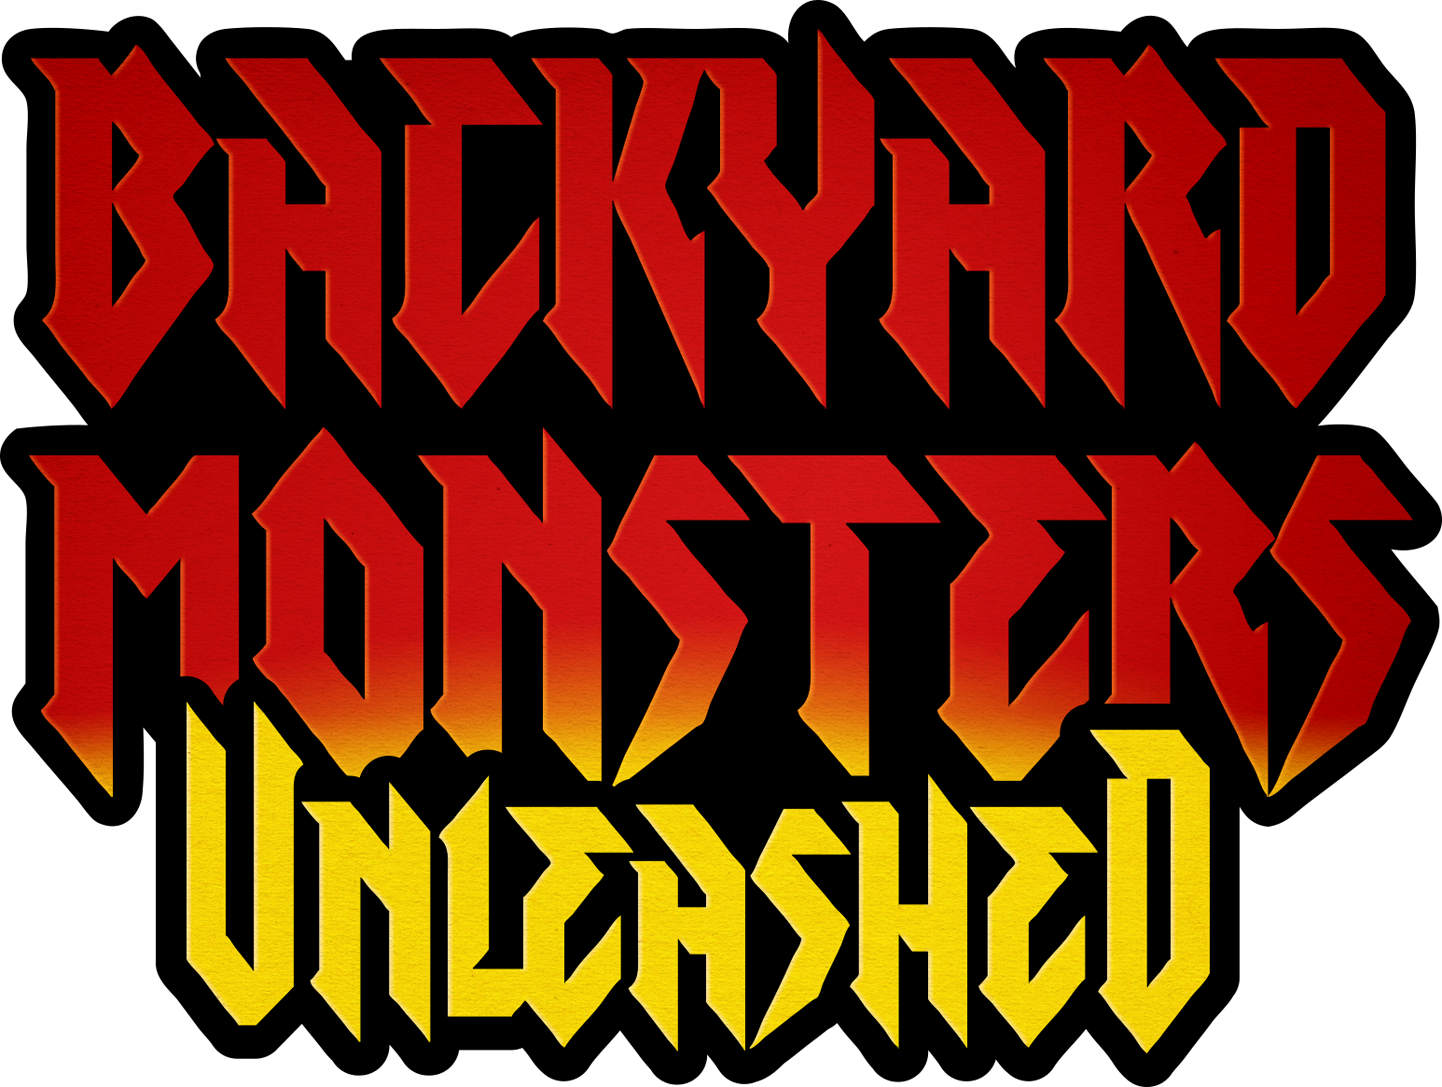 backyard monsters wikia